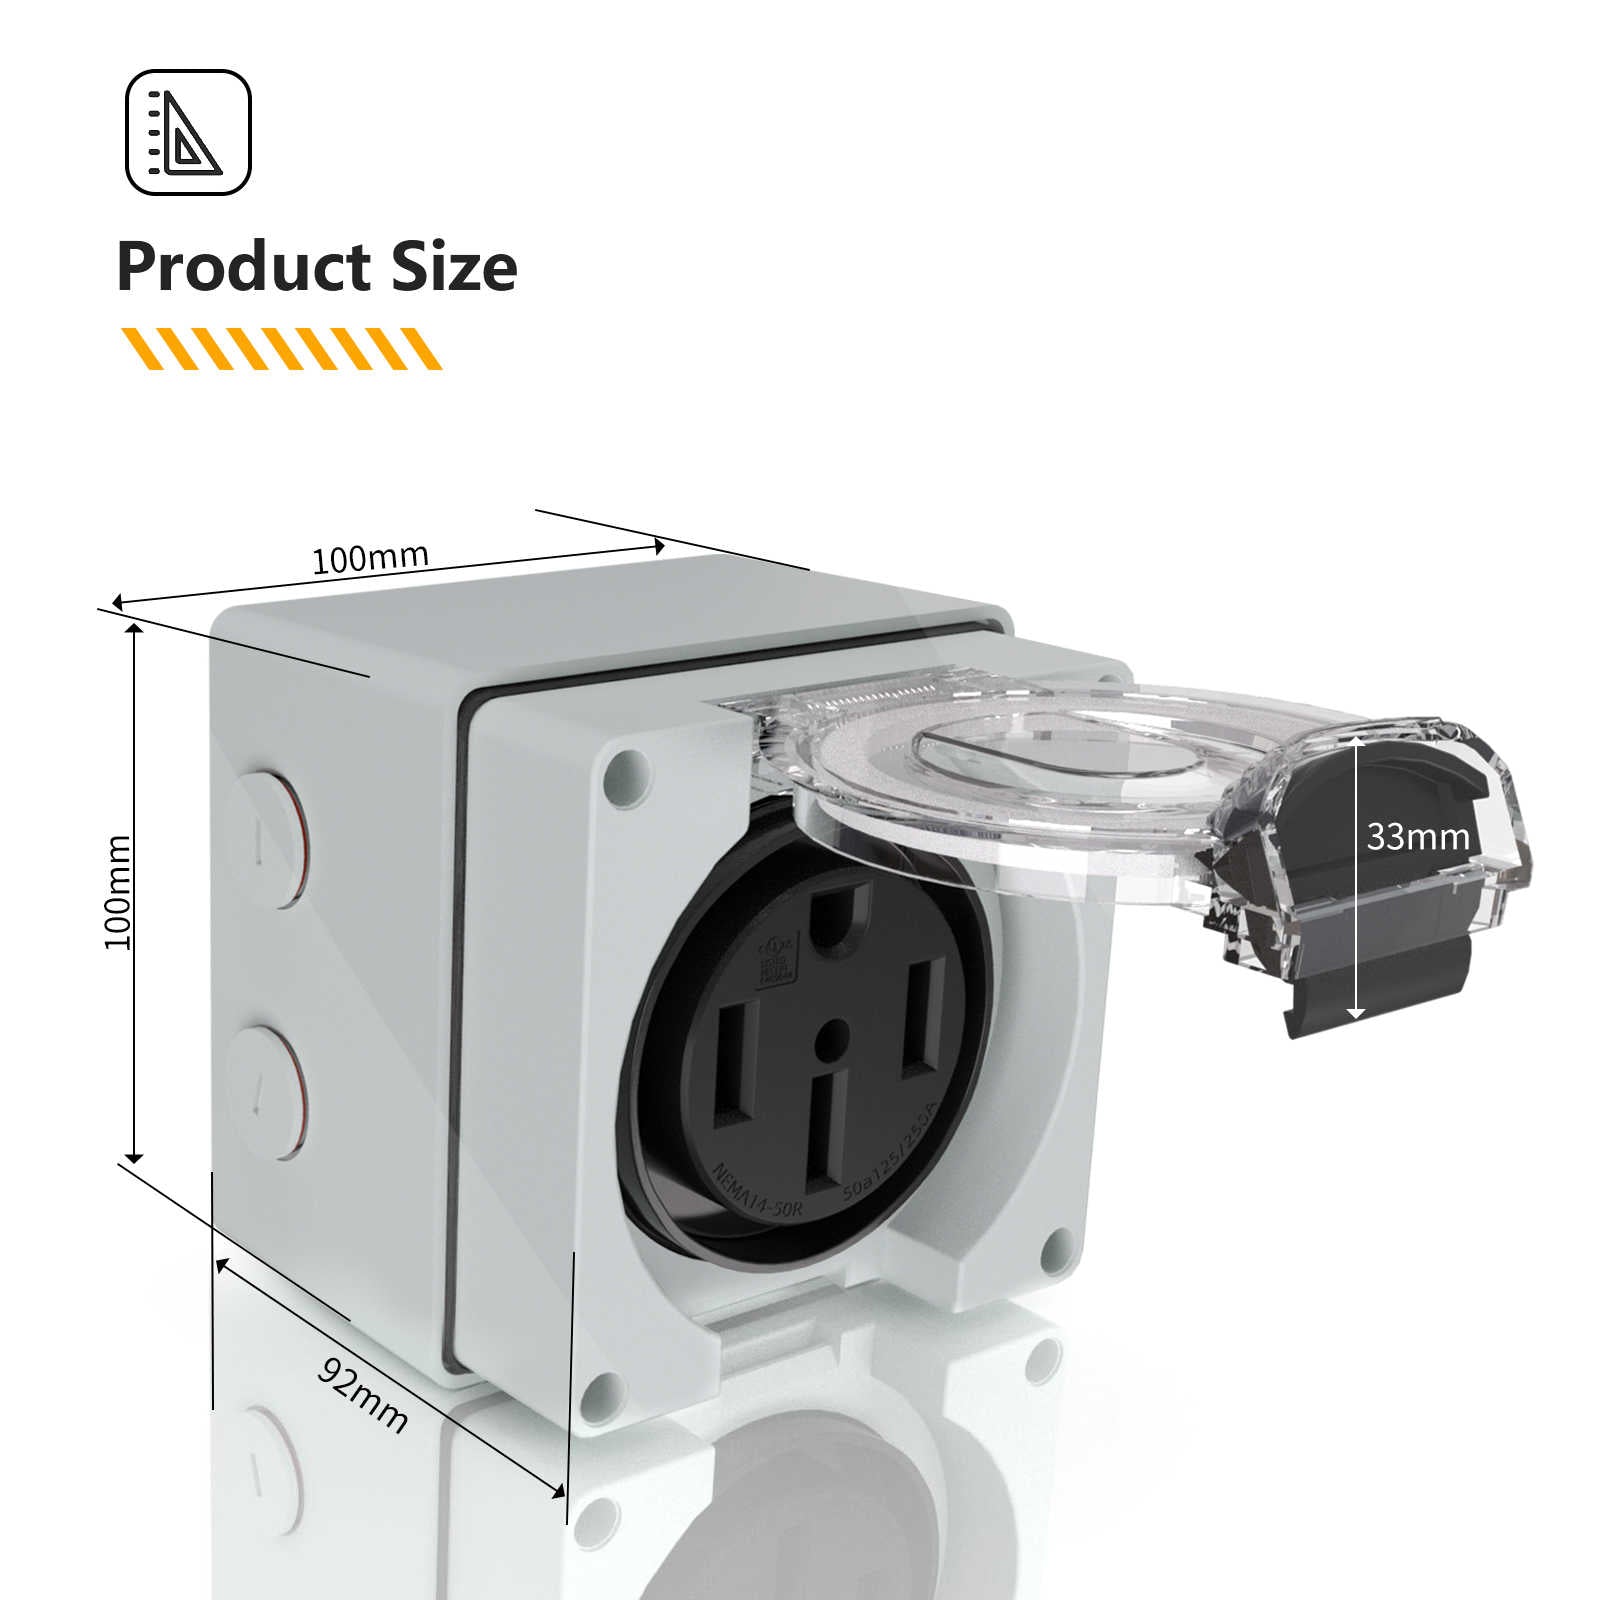 NEMA 14-50R 50Amp RV Power Outlet Box precise product size